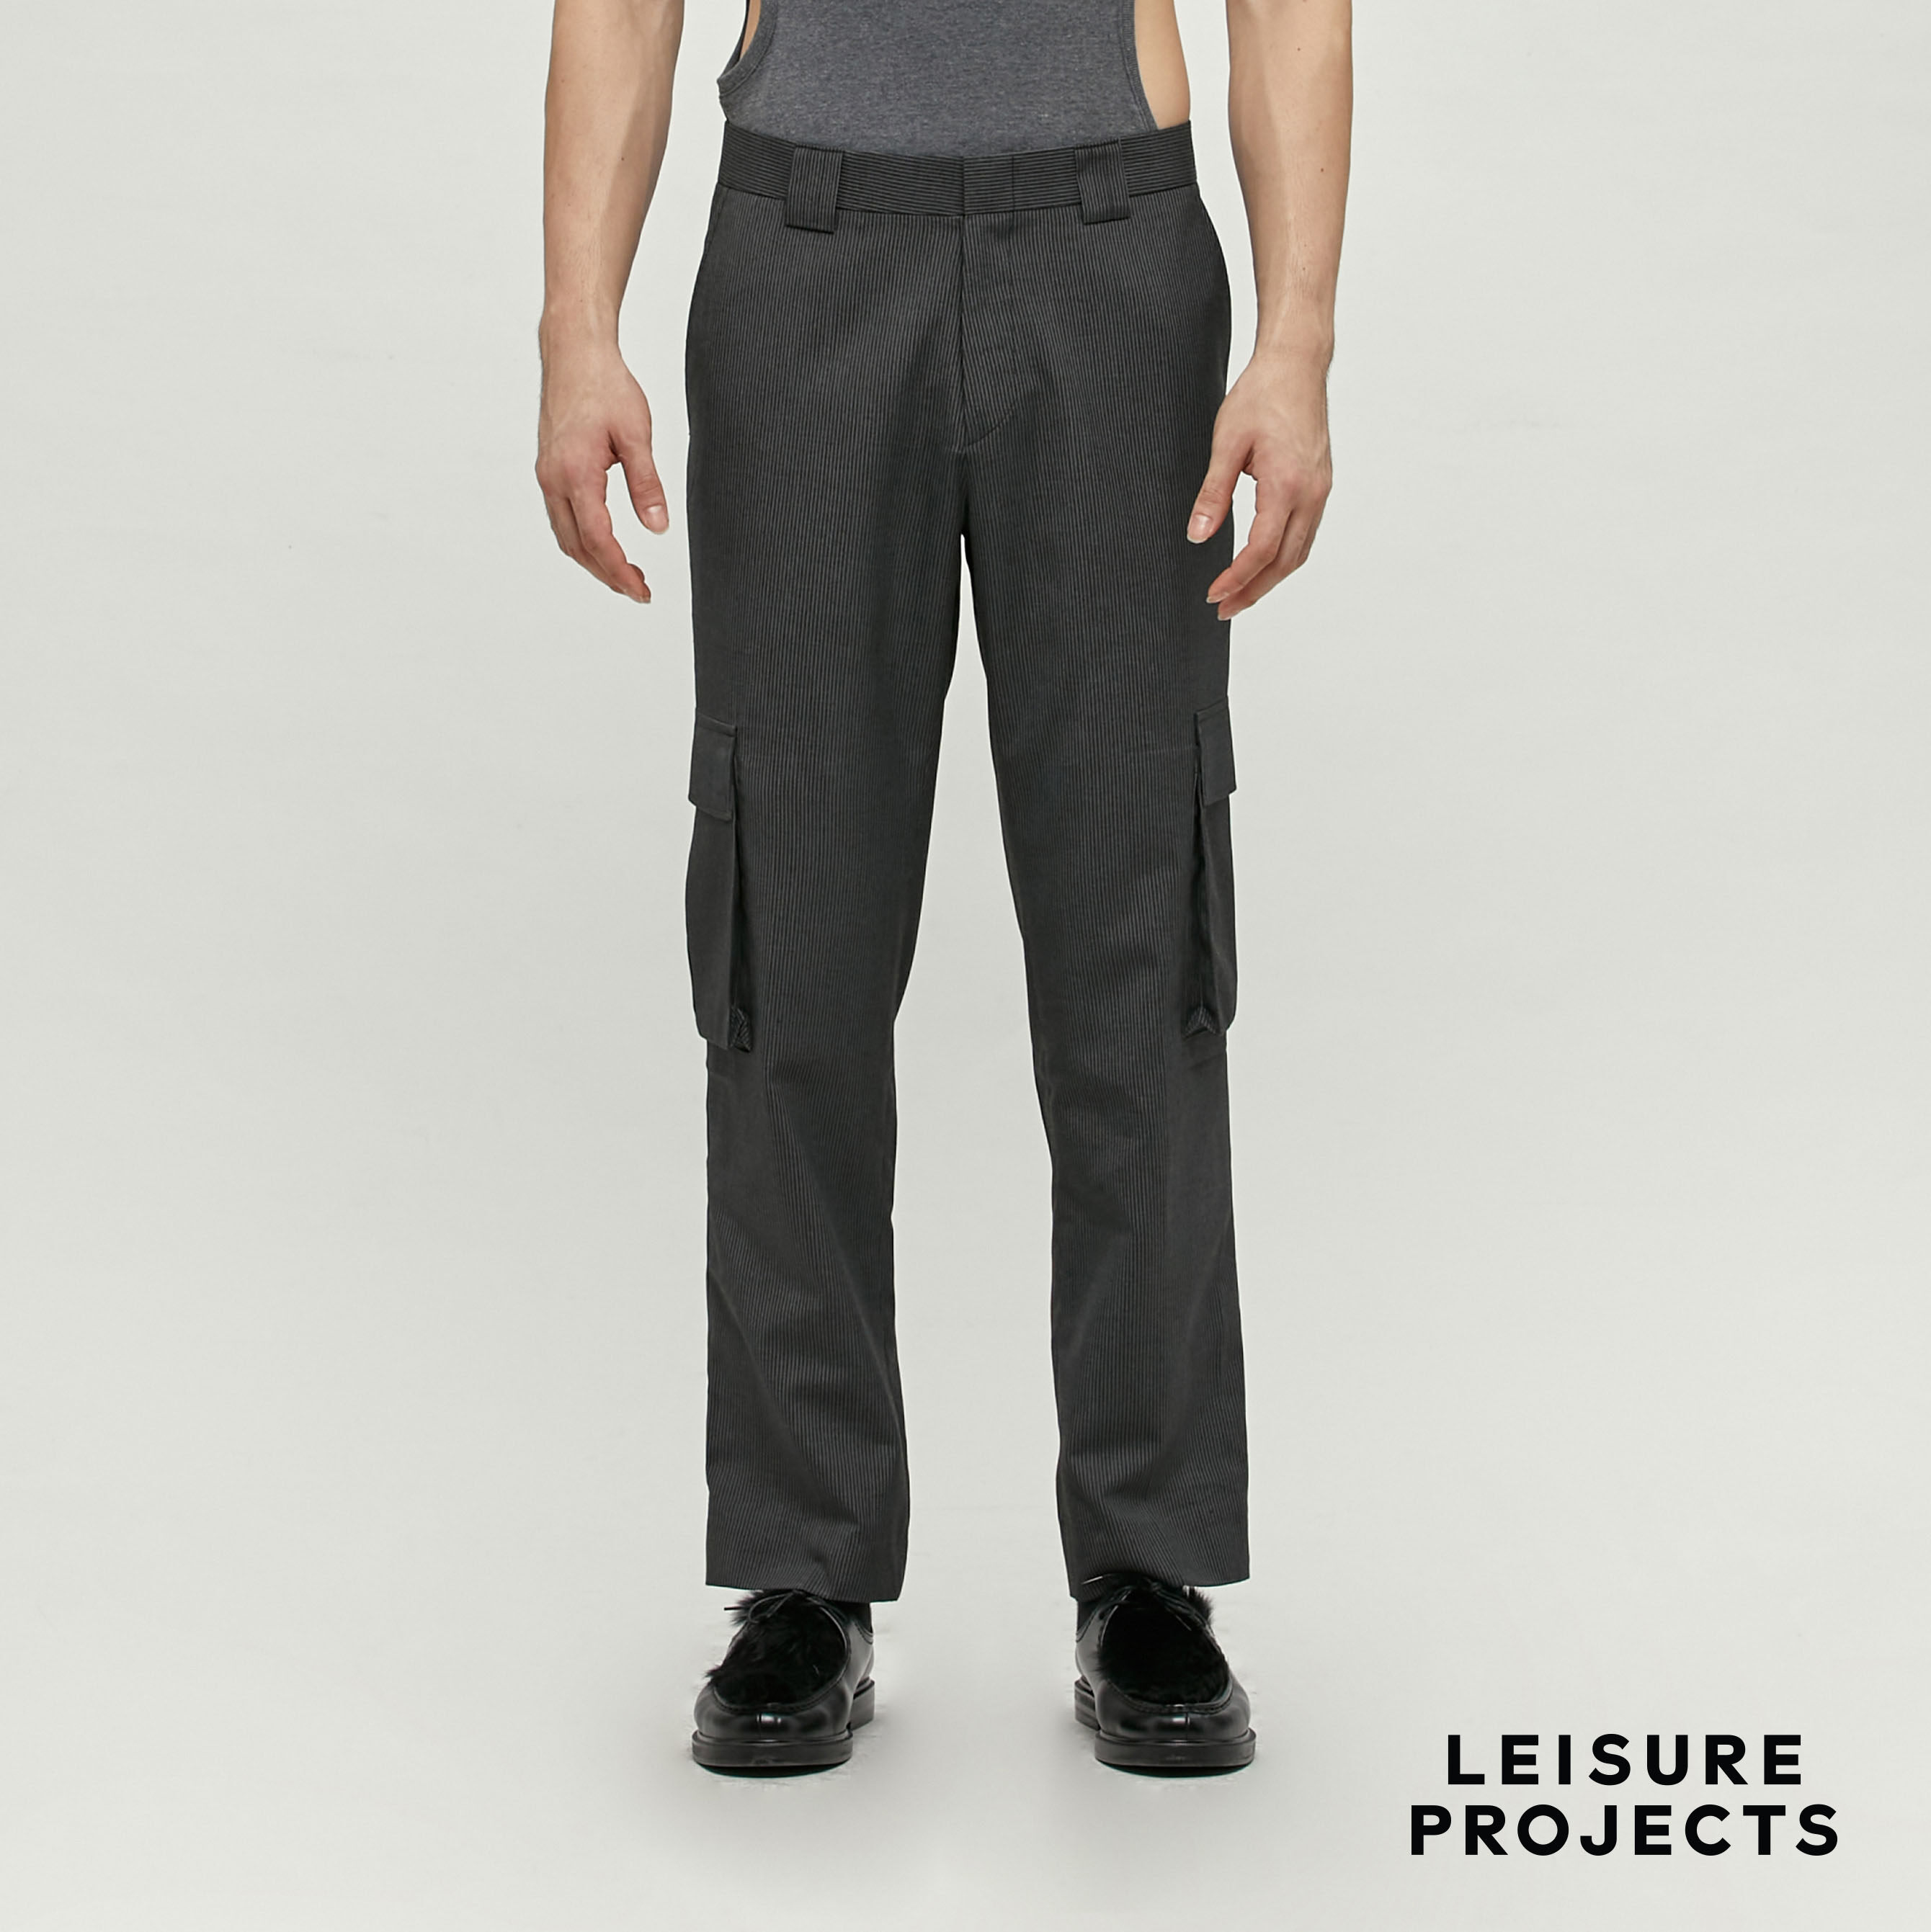 (LEISURE PROJECTS) TAILOR CARGO TROUSERS กางเกง LEISURE PROJECTS ผ้า Light weight wool ดีเทลตัดต่อผ้าหลากสี